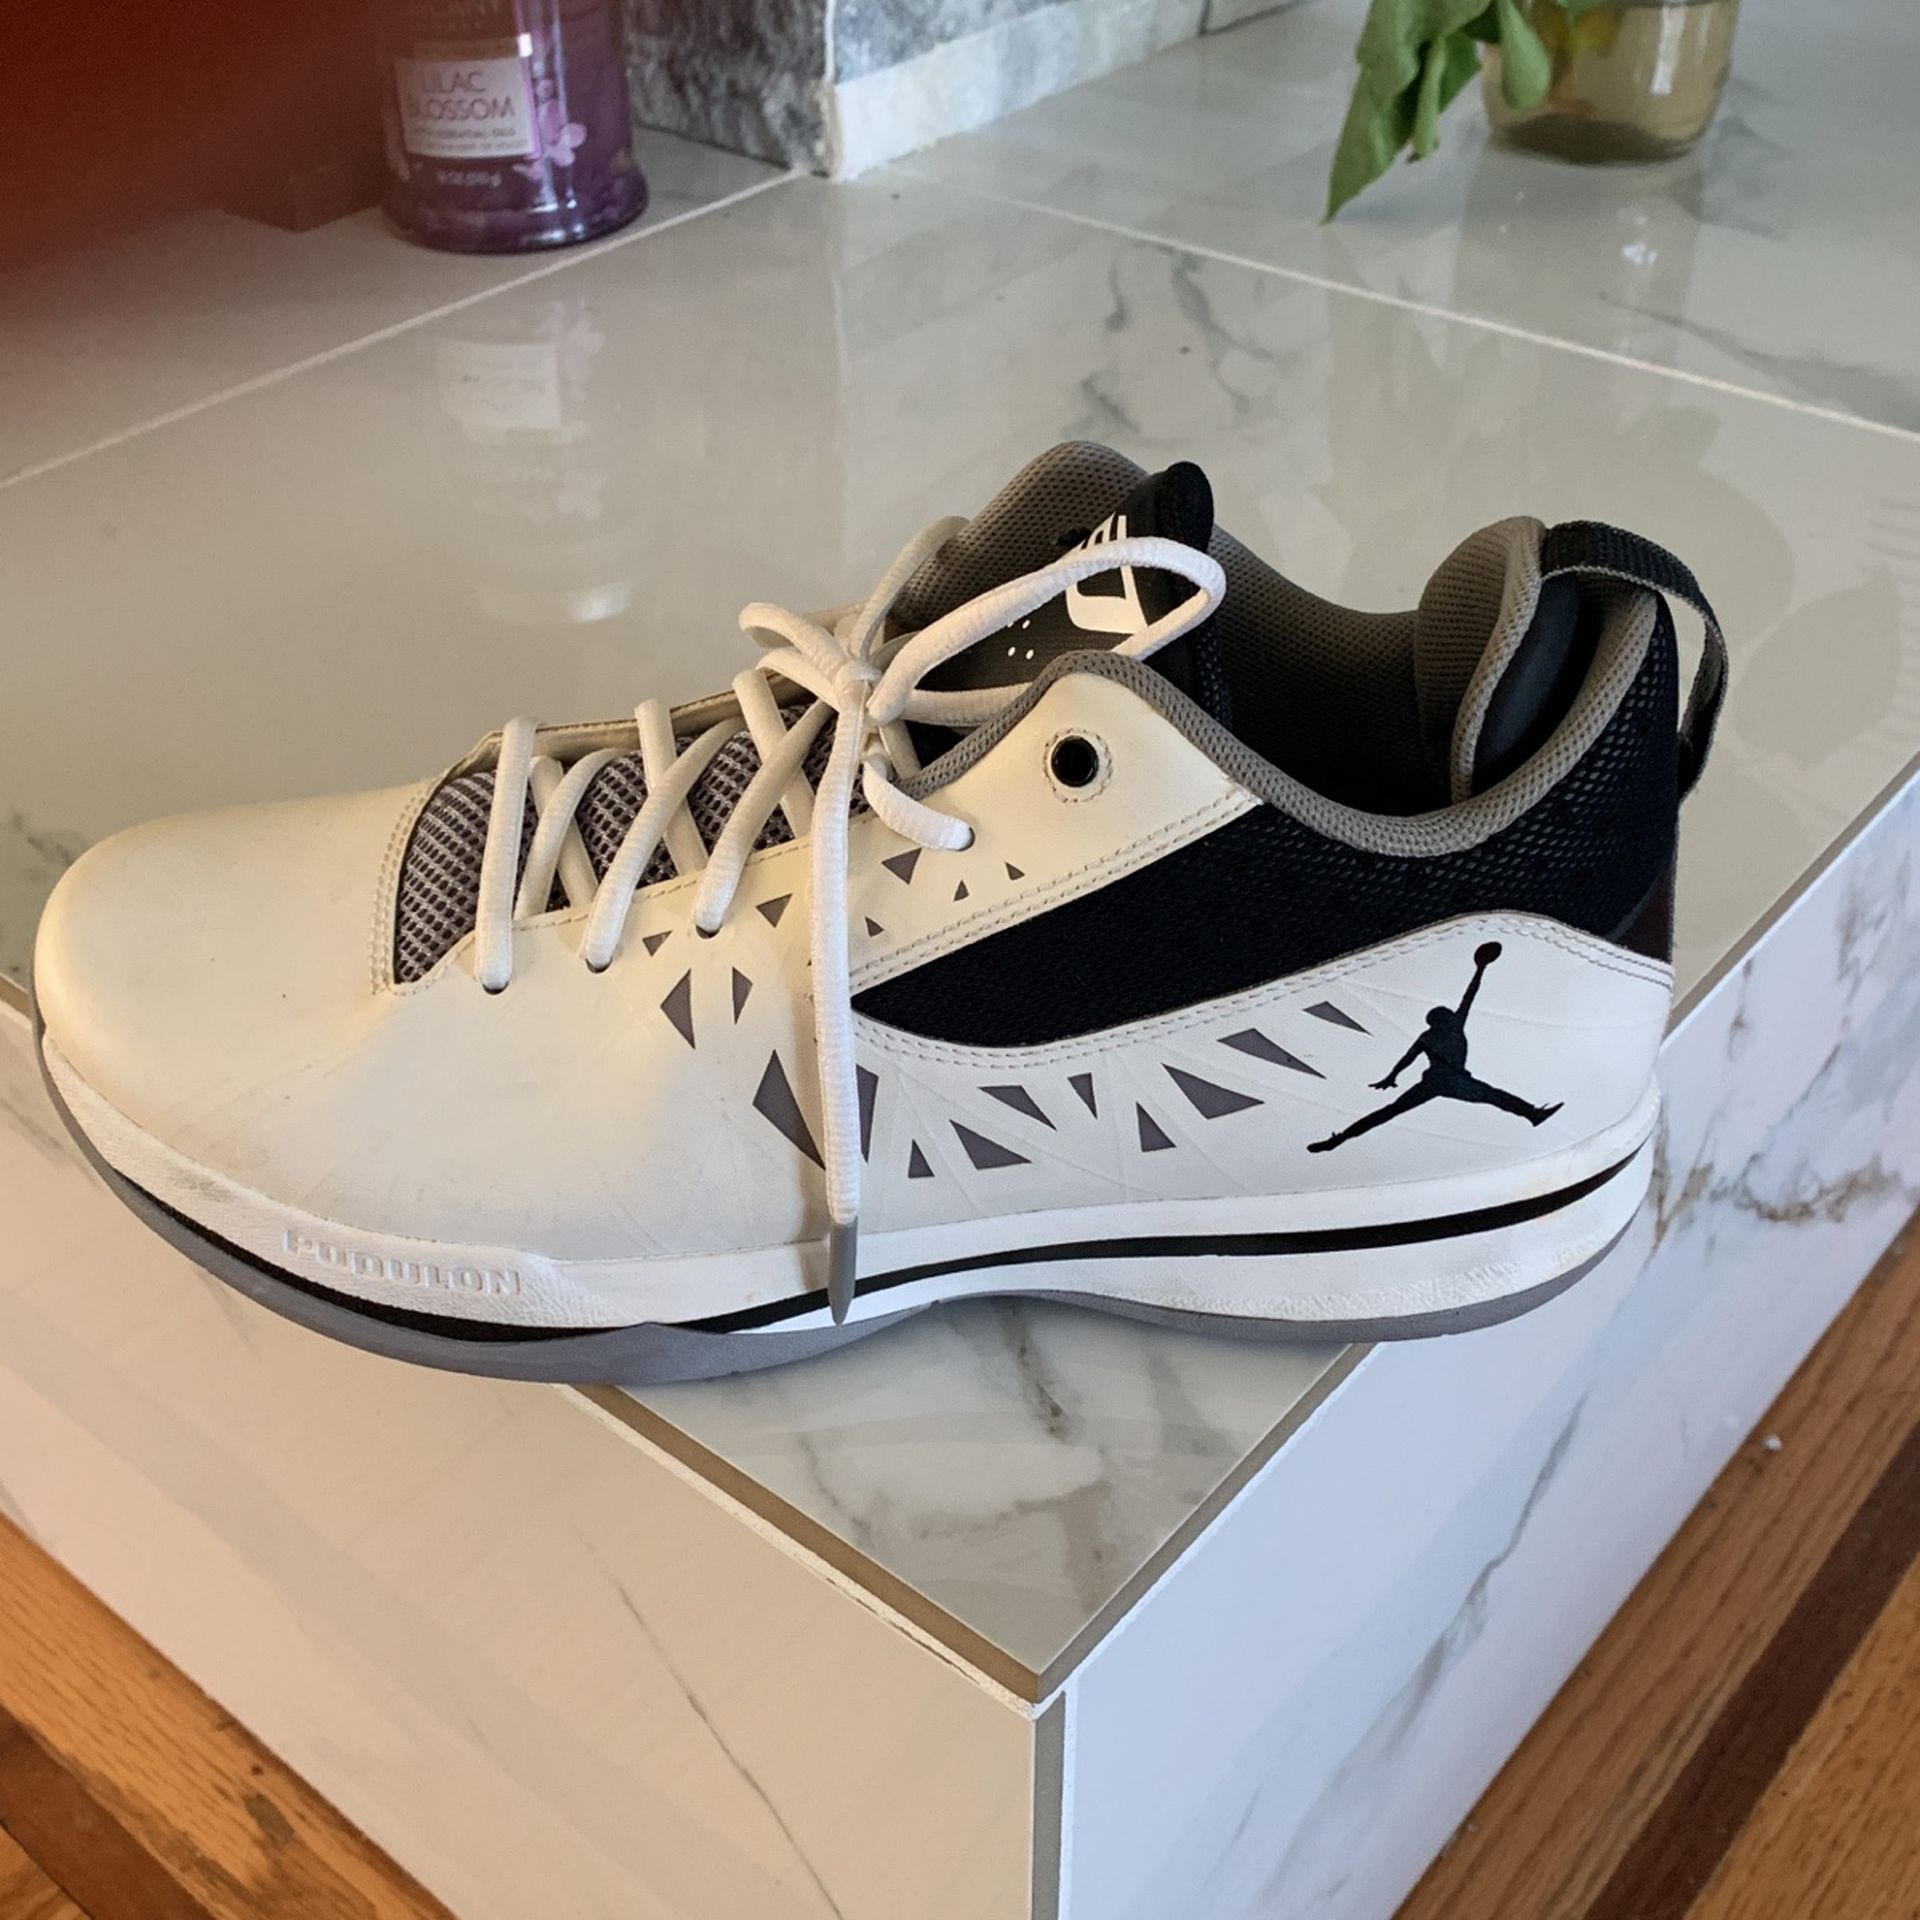 Jordan shoes